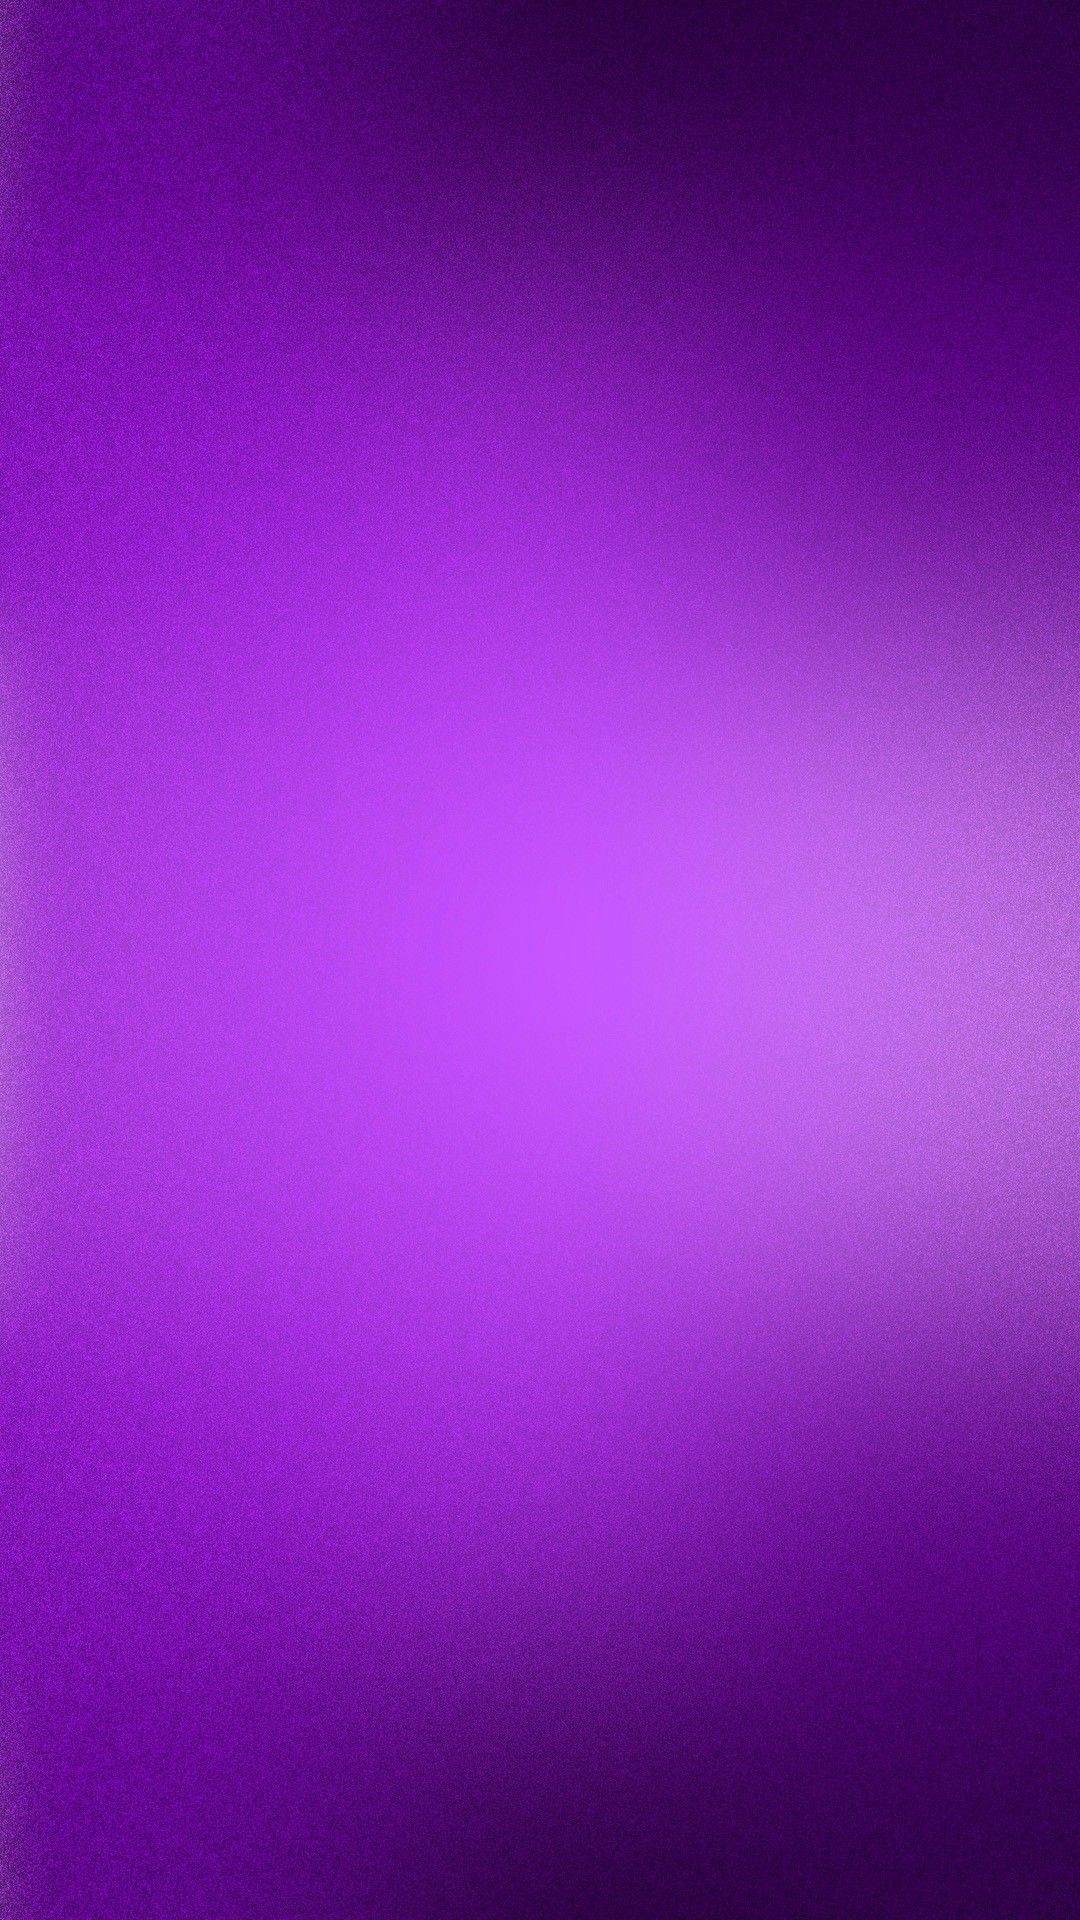 1080x1920 HD Purple iPhone Wallpaper - Best iPhone Wallpaper